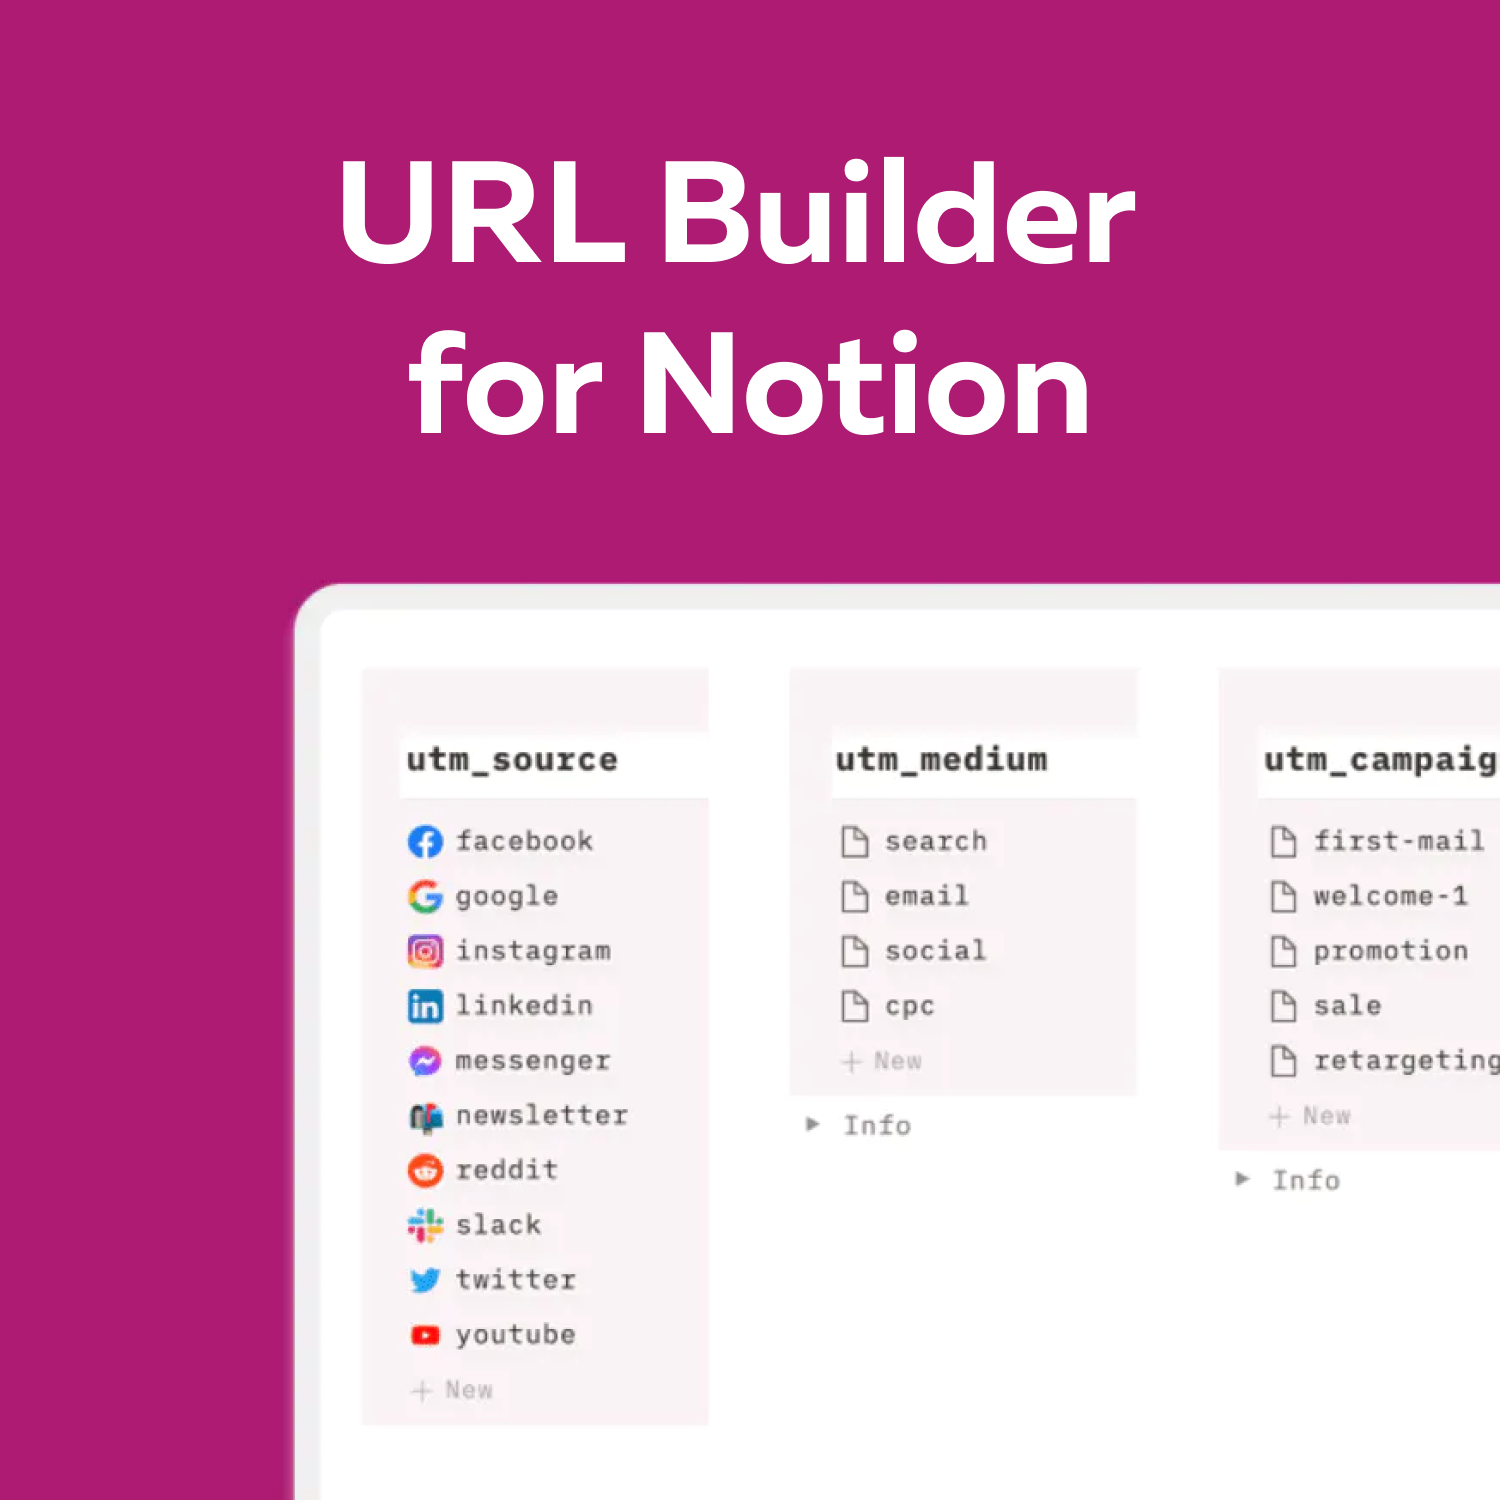 URL Builder for notion.